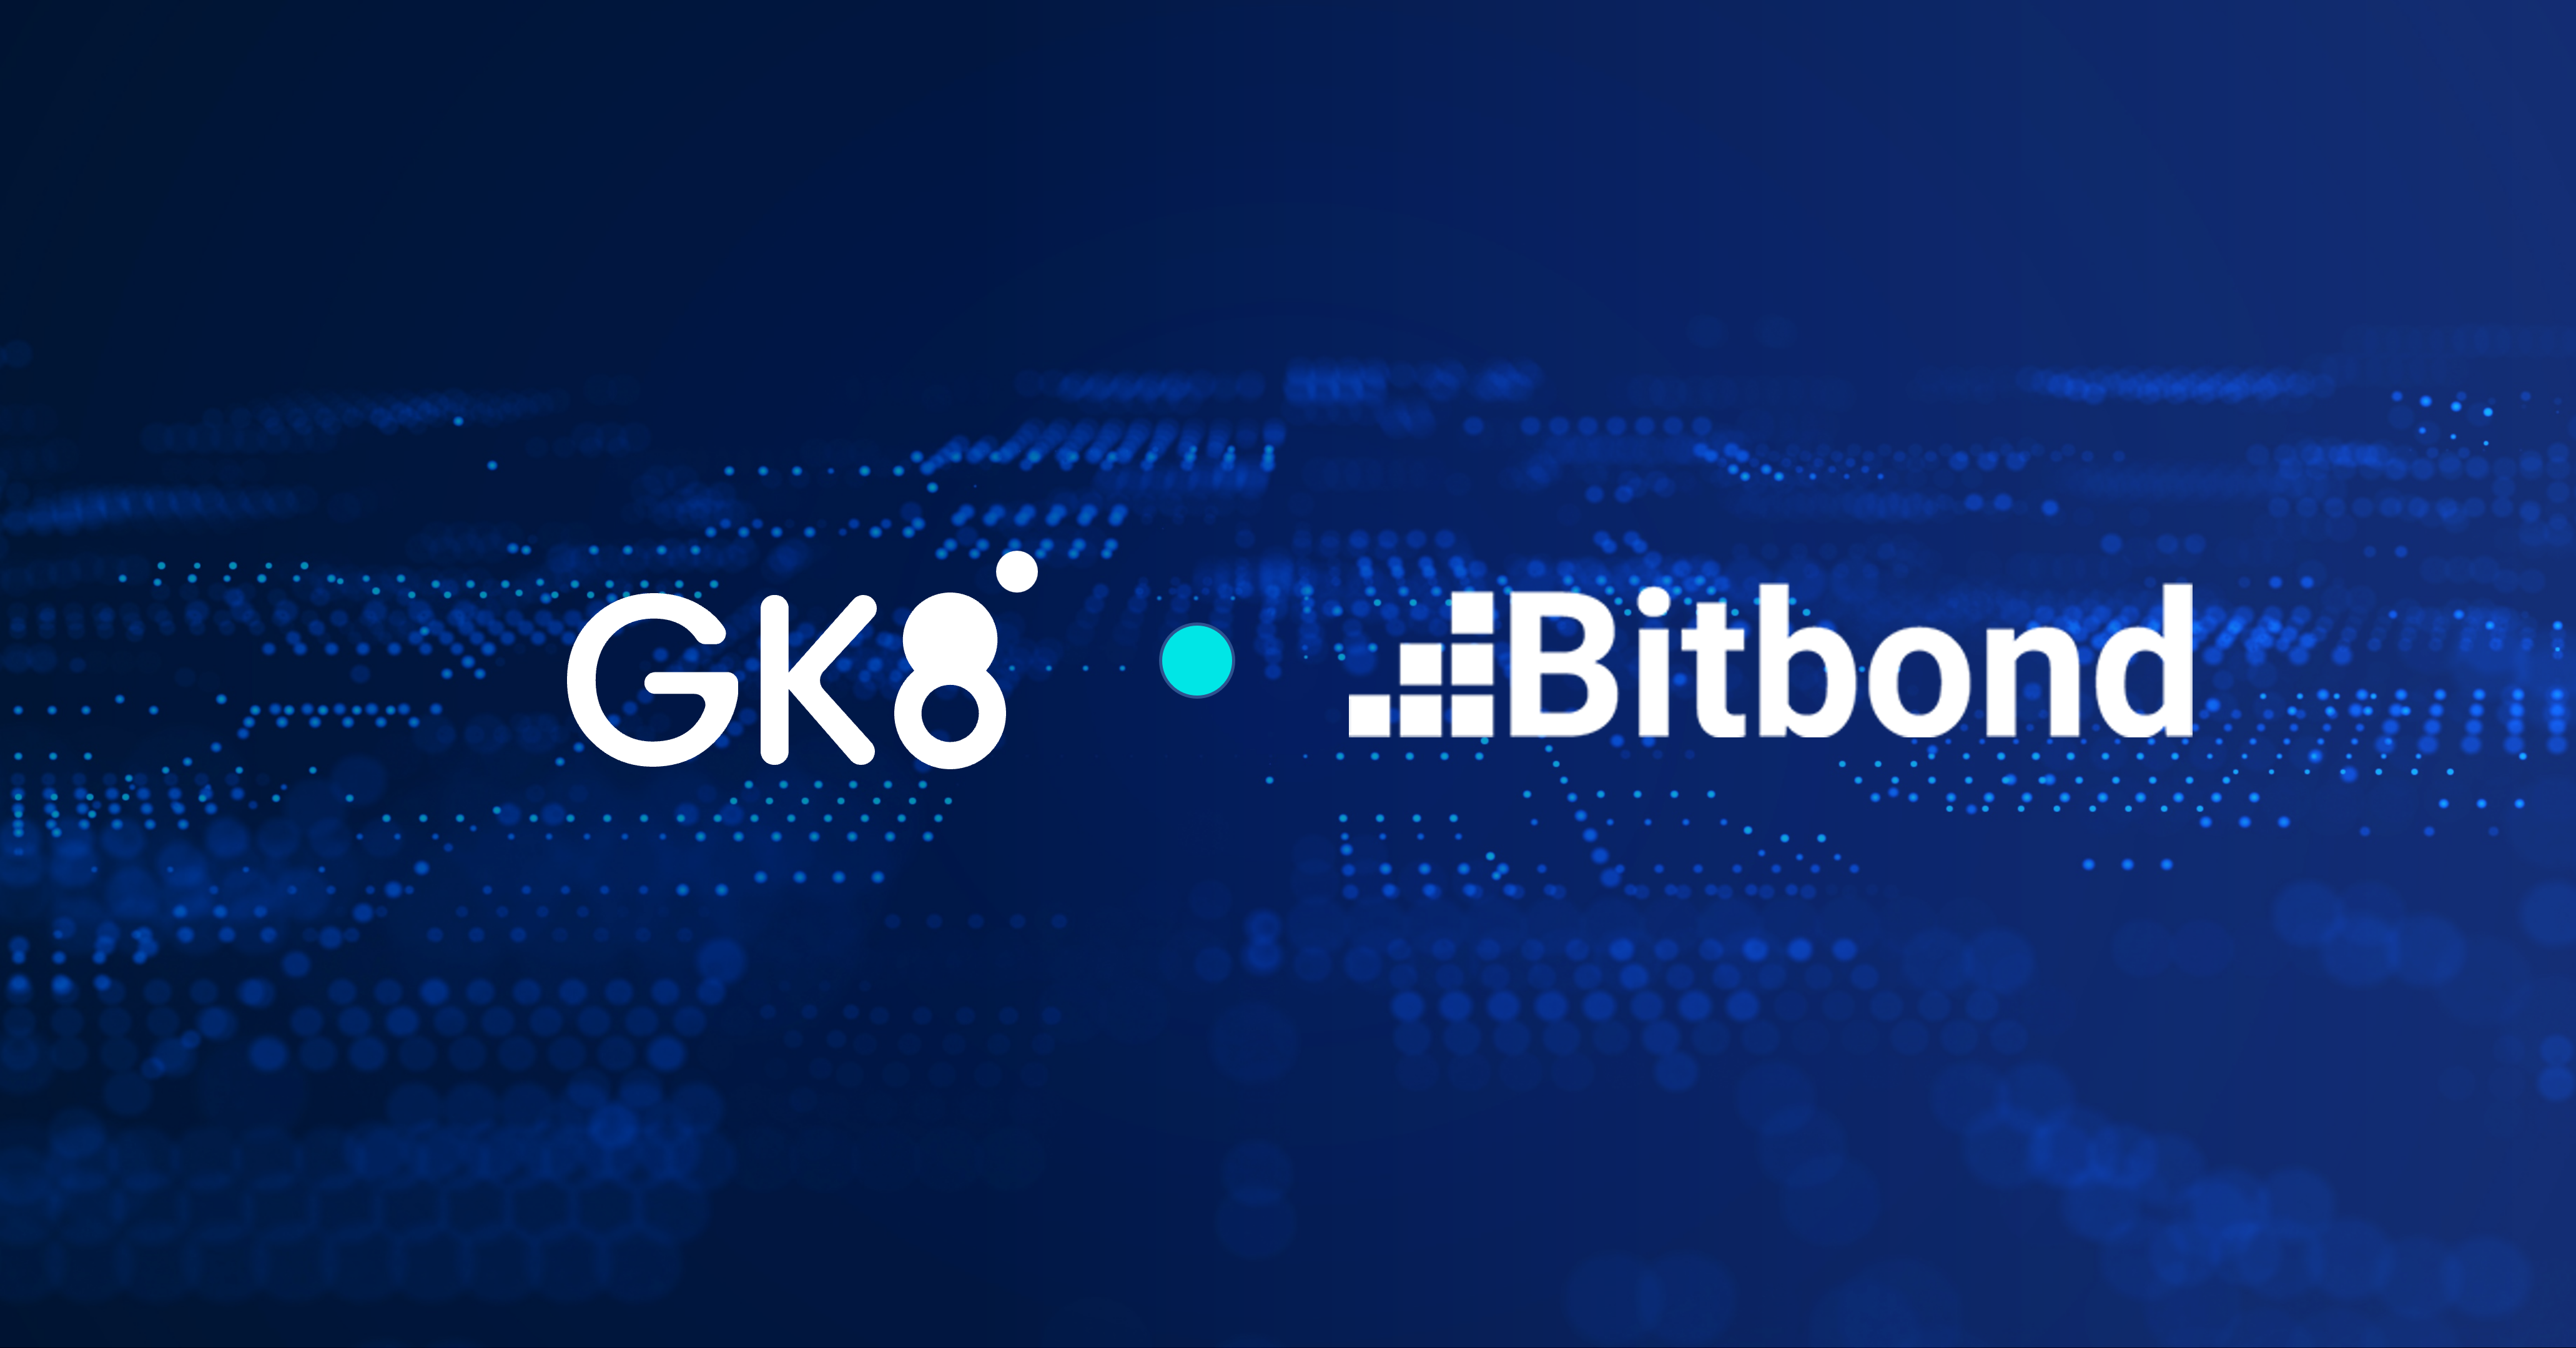 GK8_Bitbond partnership